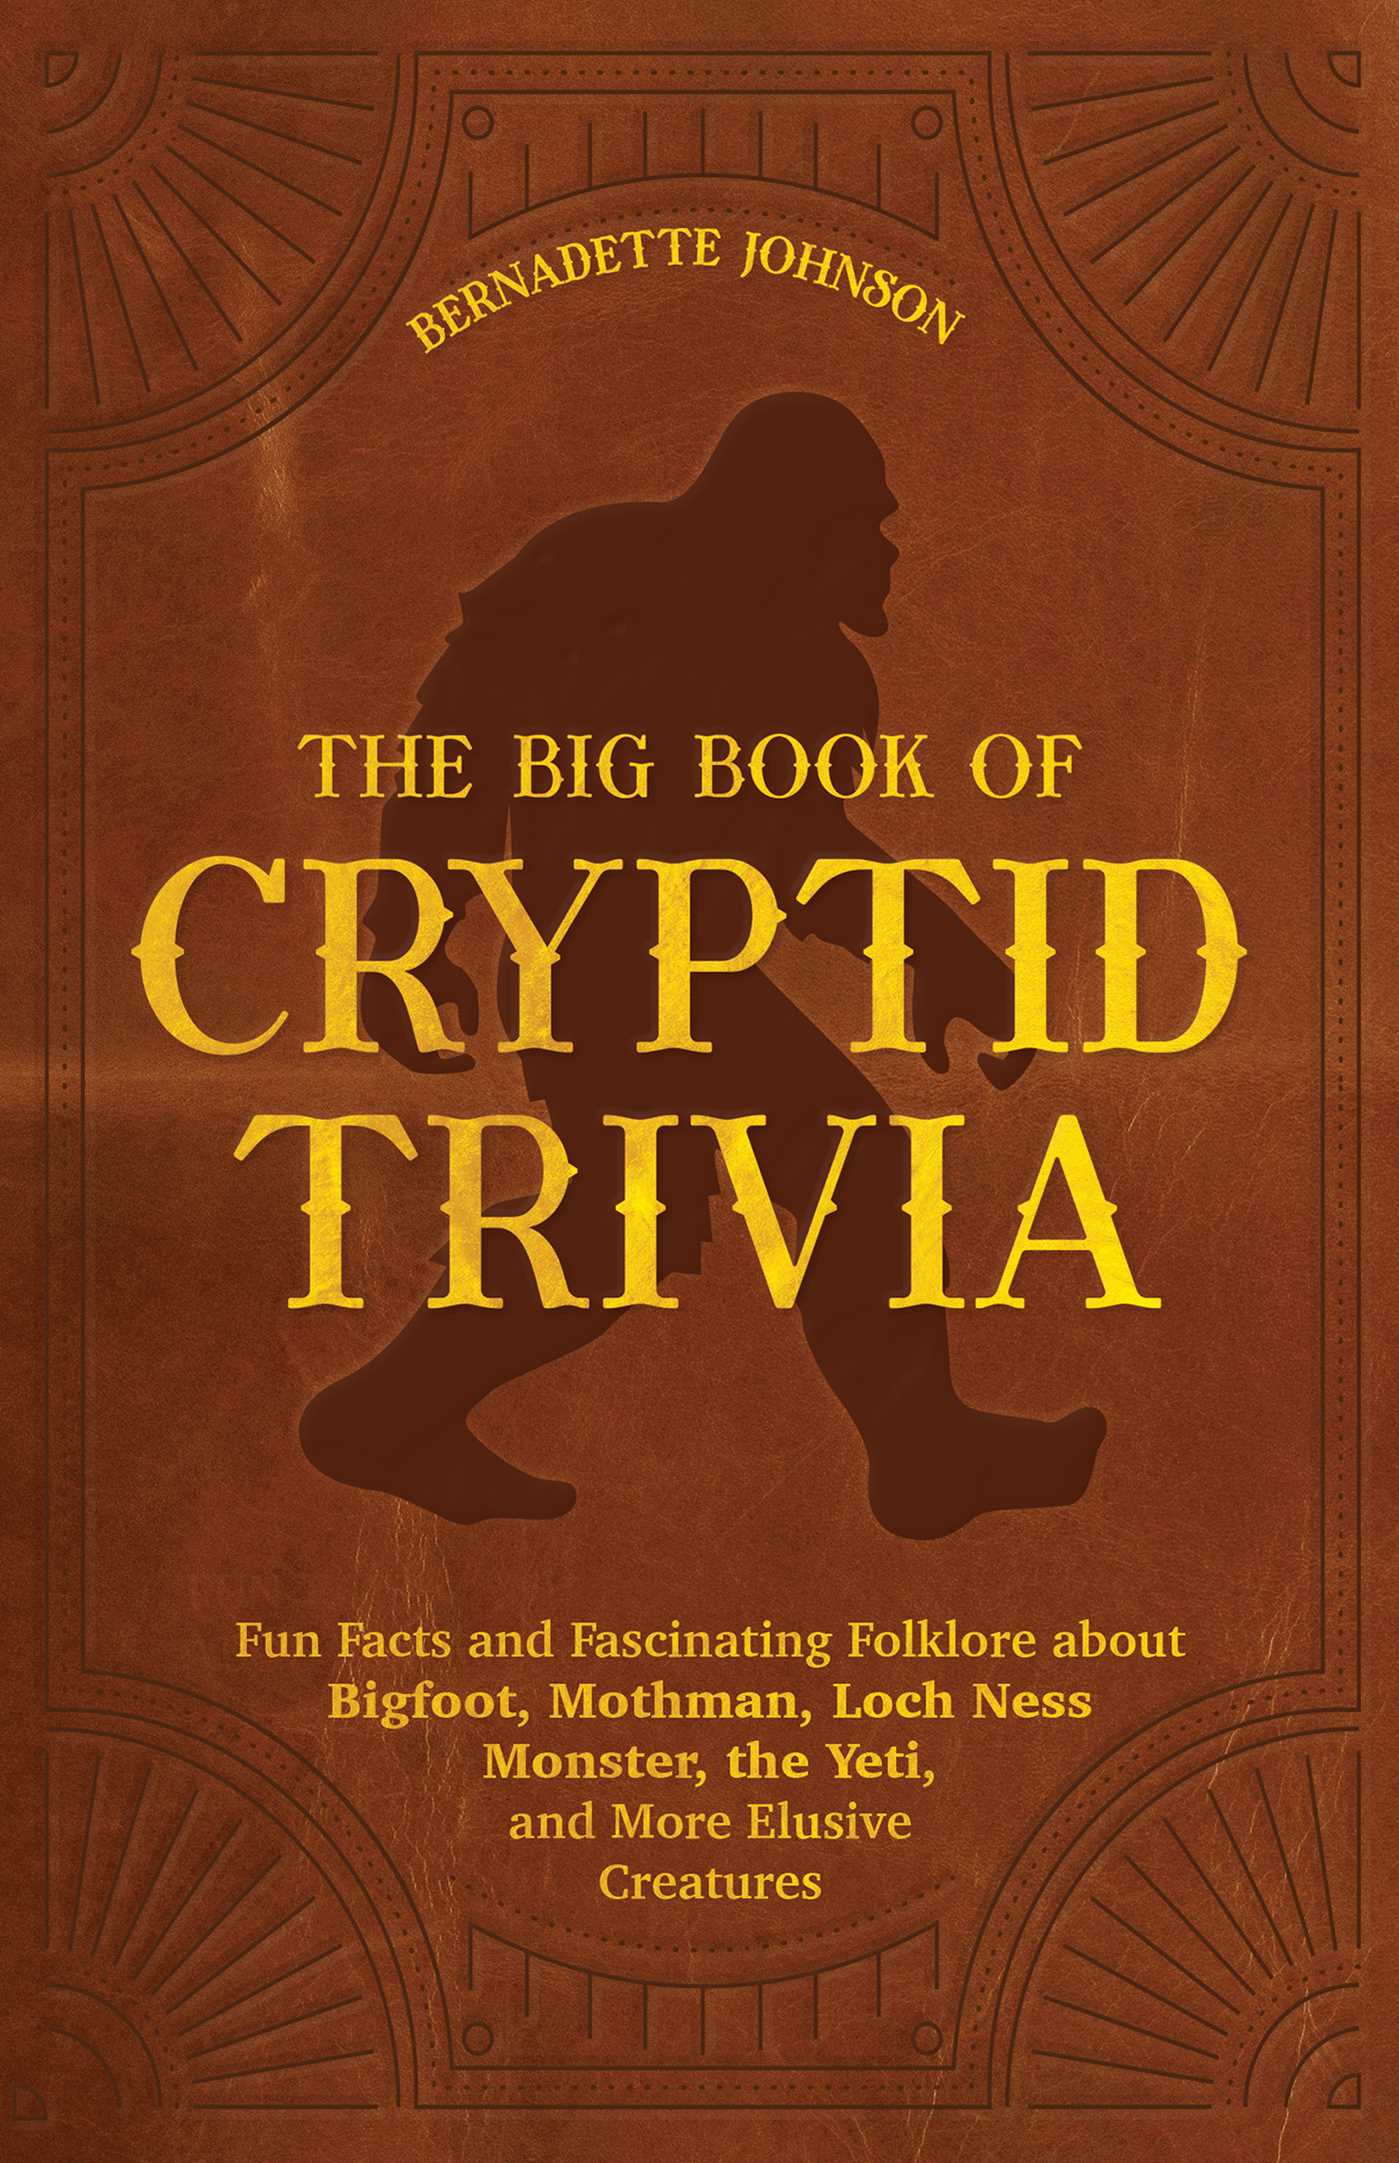 The Big Book of Cryptid Trivia - Bernadette Johnson